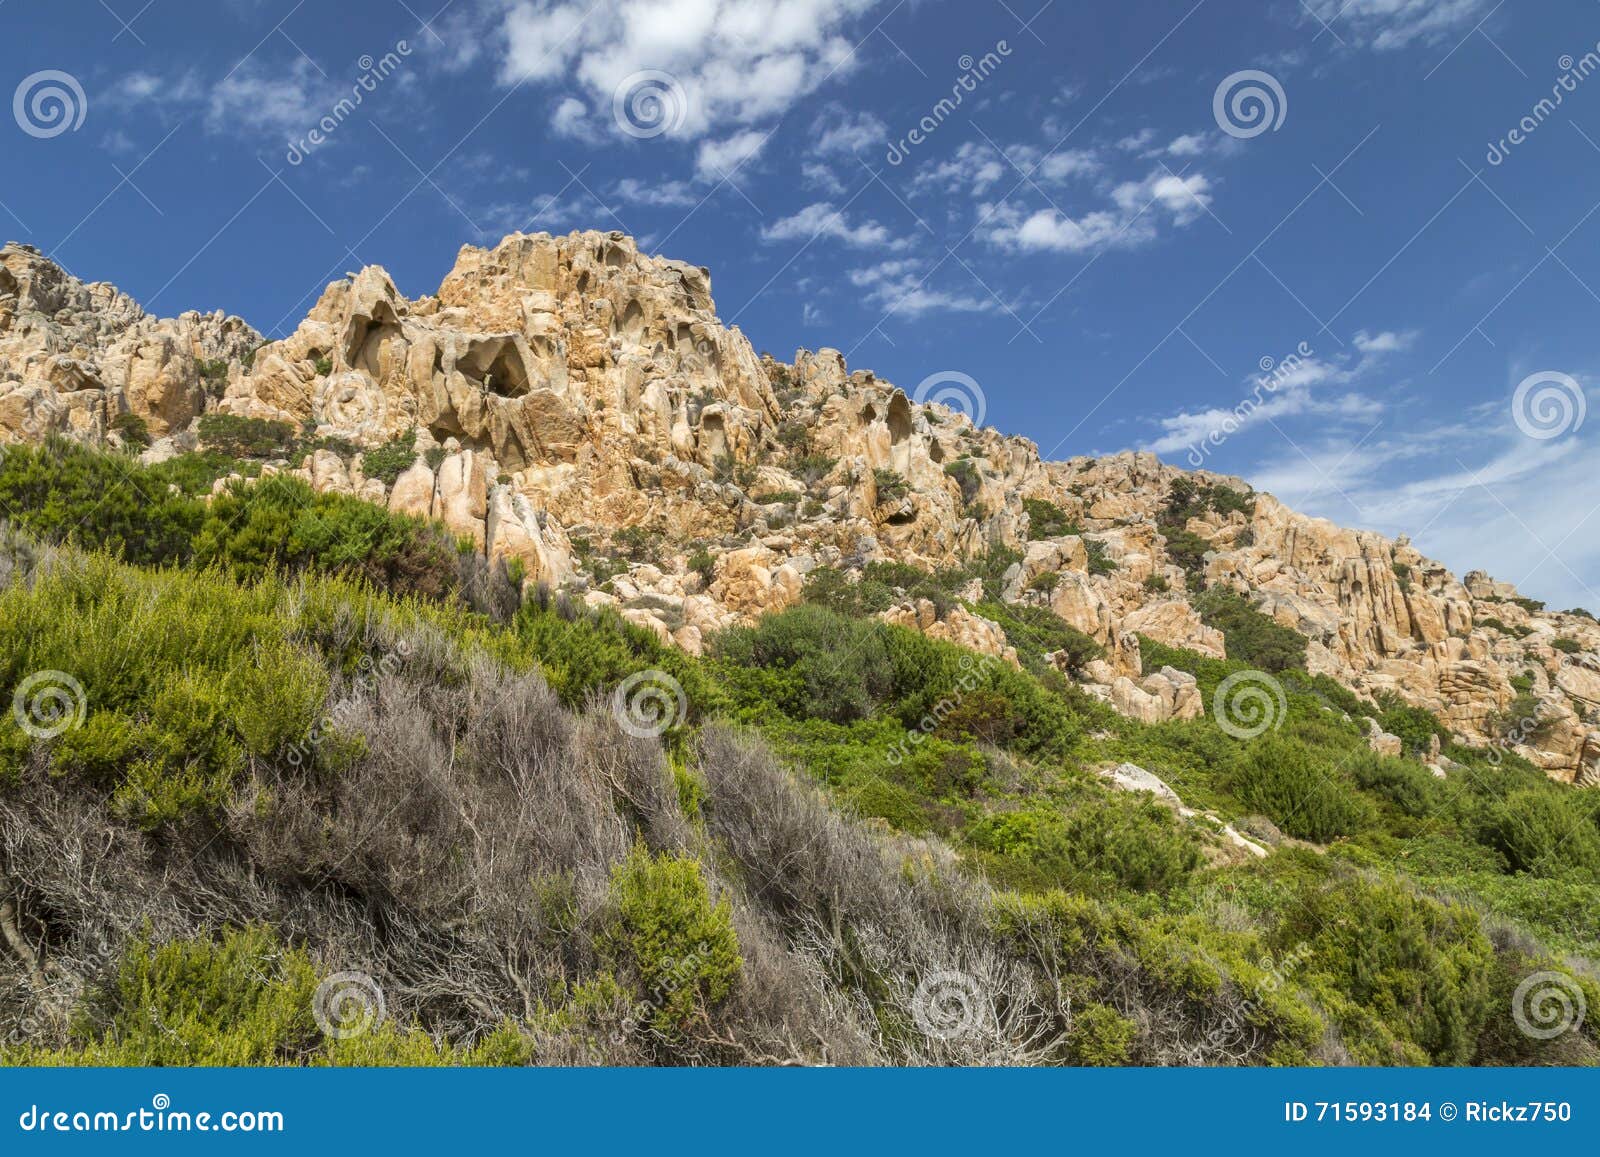 rocks and mountains behing bay of cala coticcio in caprera island, sardinia, italy